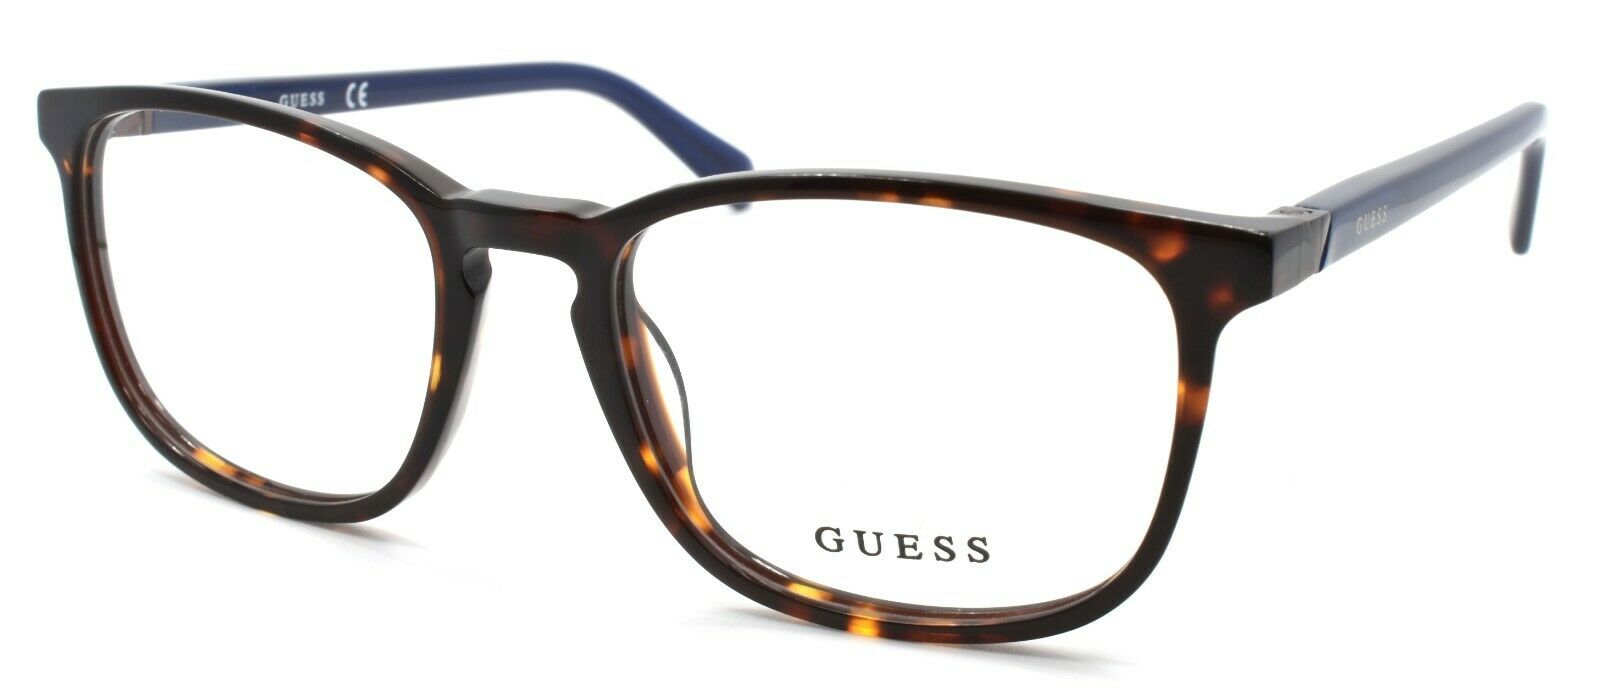 1-GUESS GU1950 052 Men's Eyeglasses Frames 52-18-145 Dark Havana / Blue-664689952830-IKSpecs